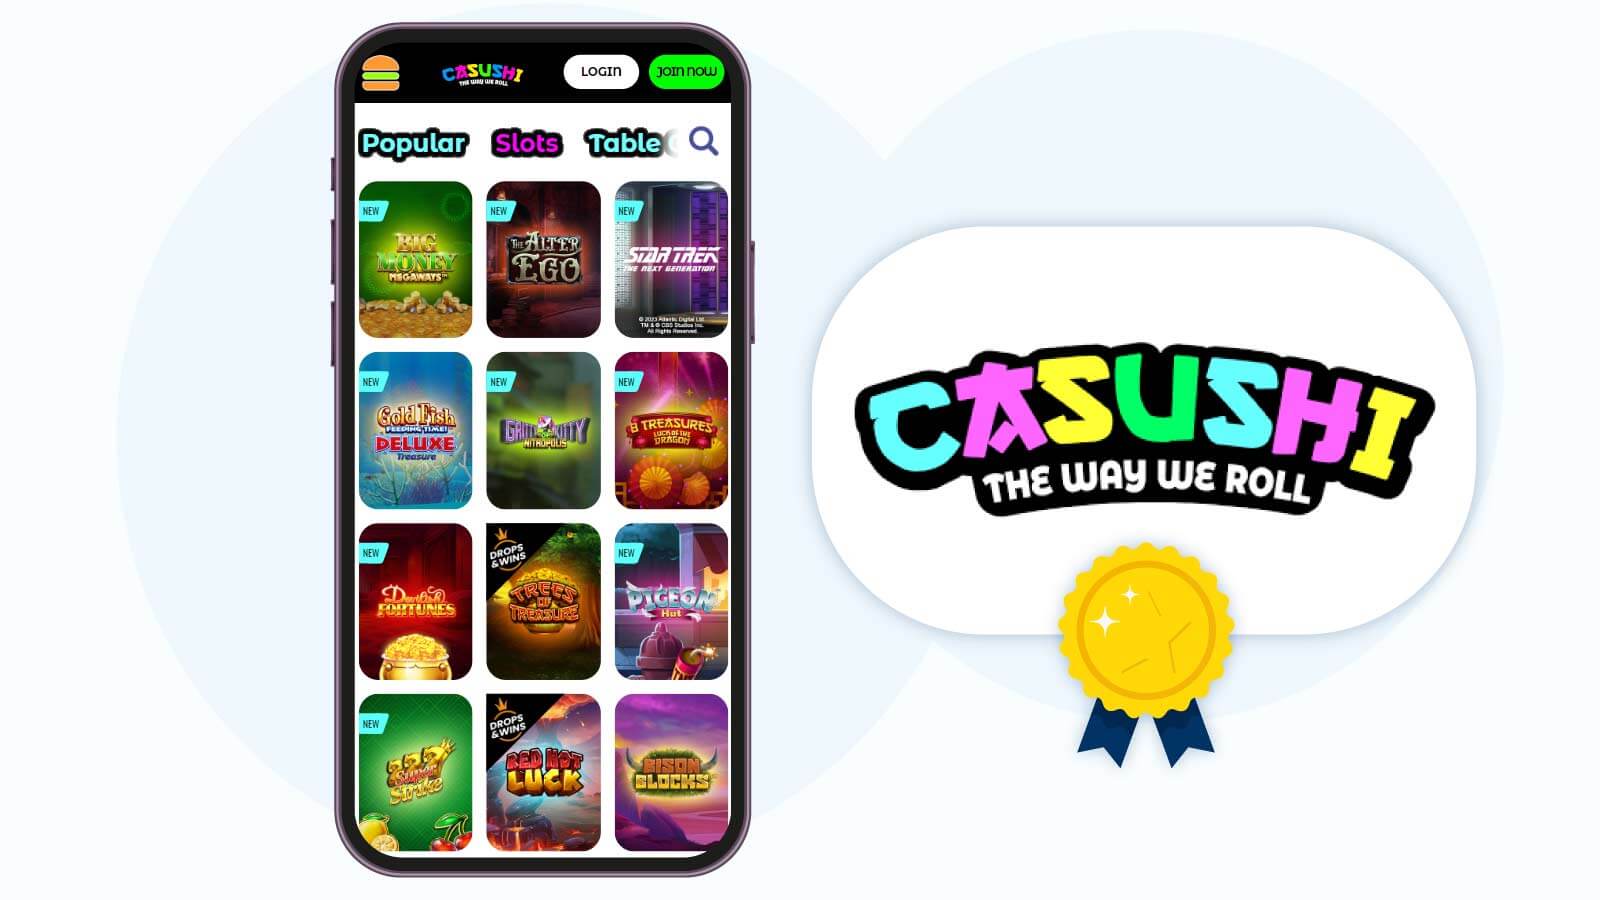 Casushi-Casino-Overall-Best-Mobile-Casino-in-the-UK